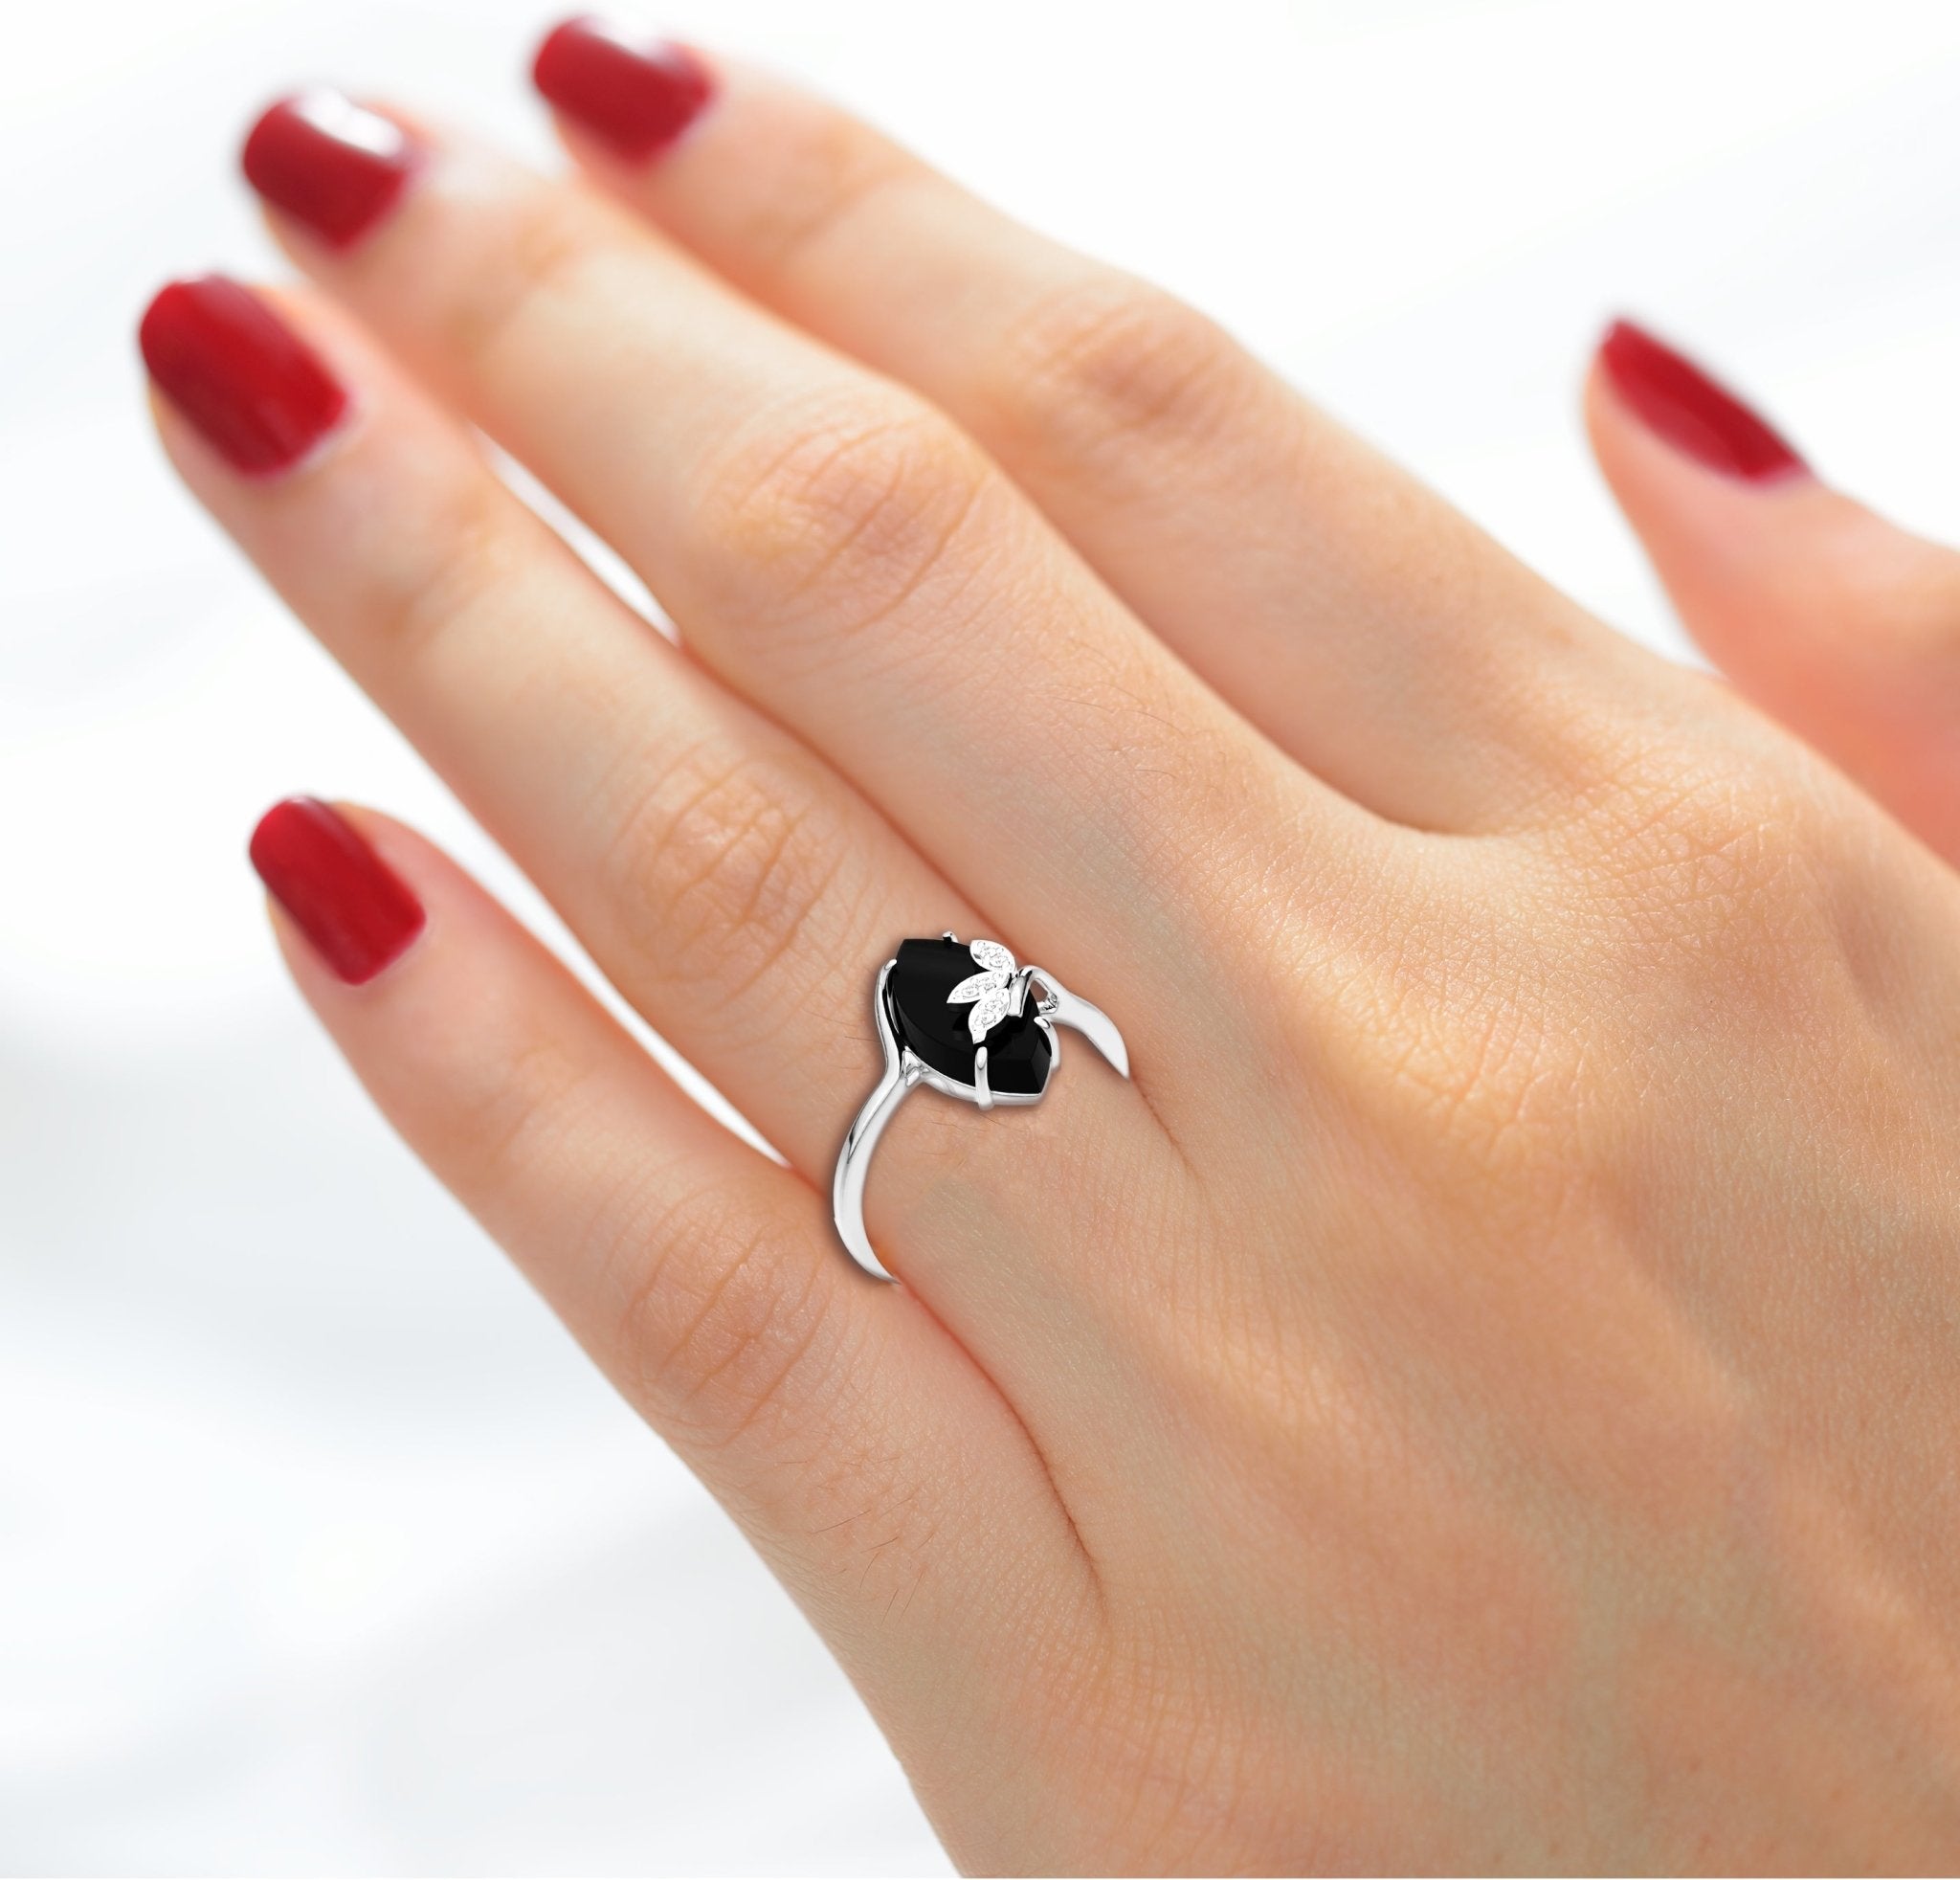 Black stone ring | Black jewelry rings, Black crystal ring, Black stone ring